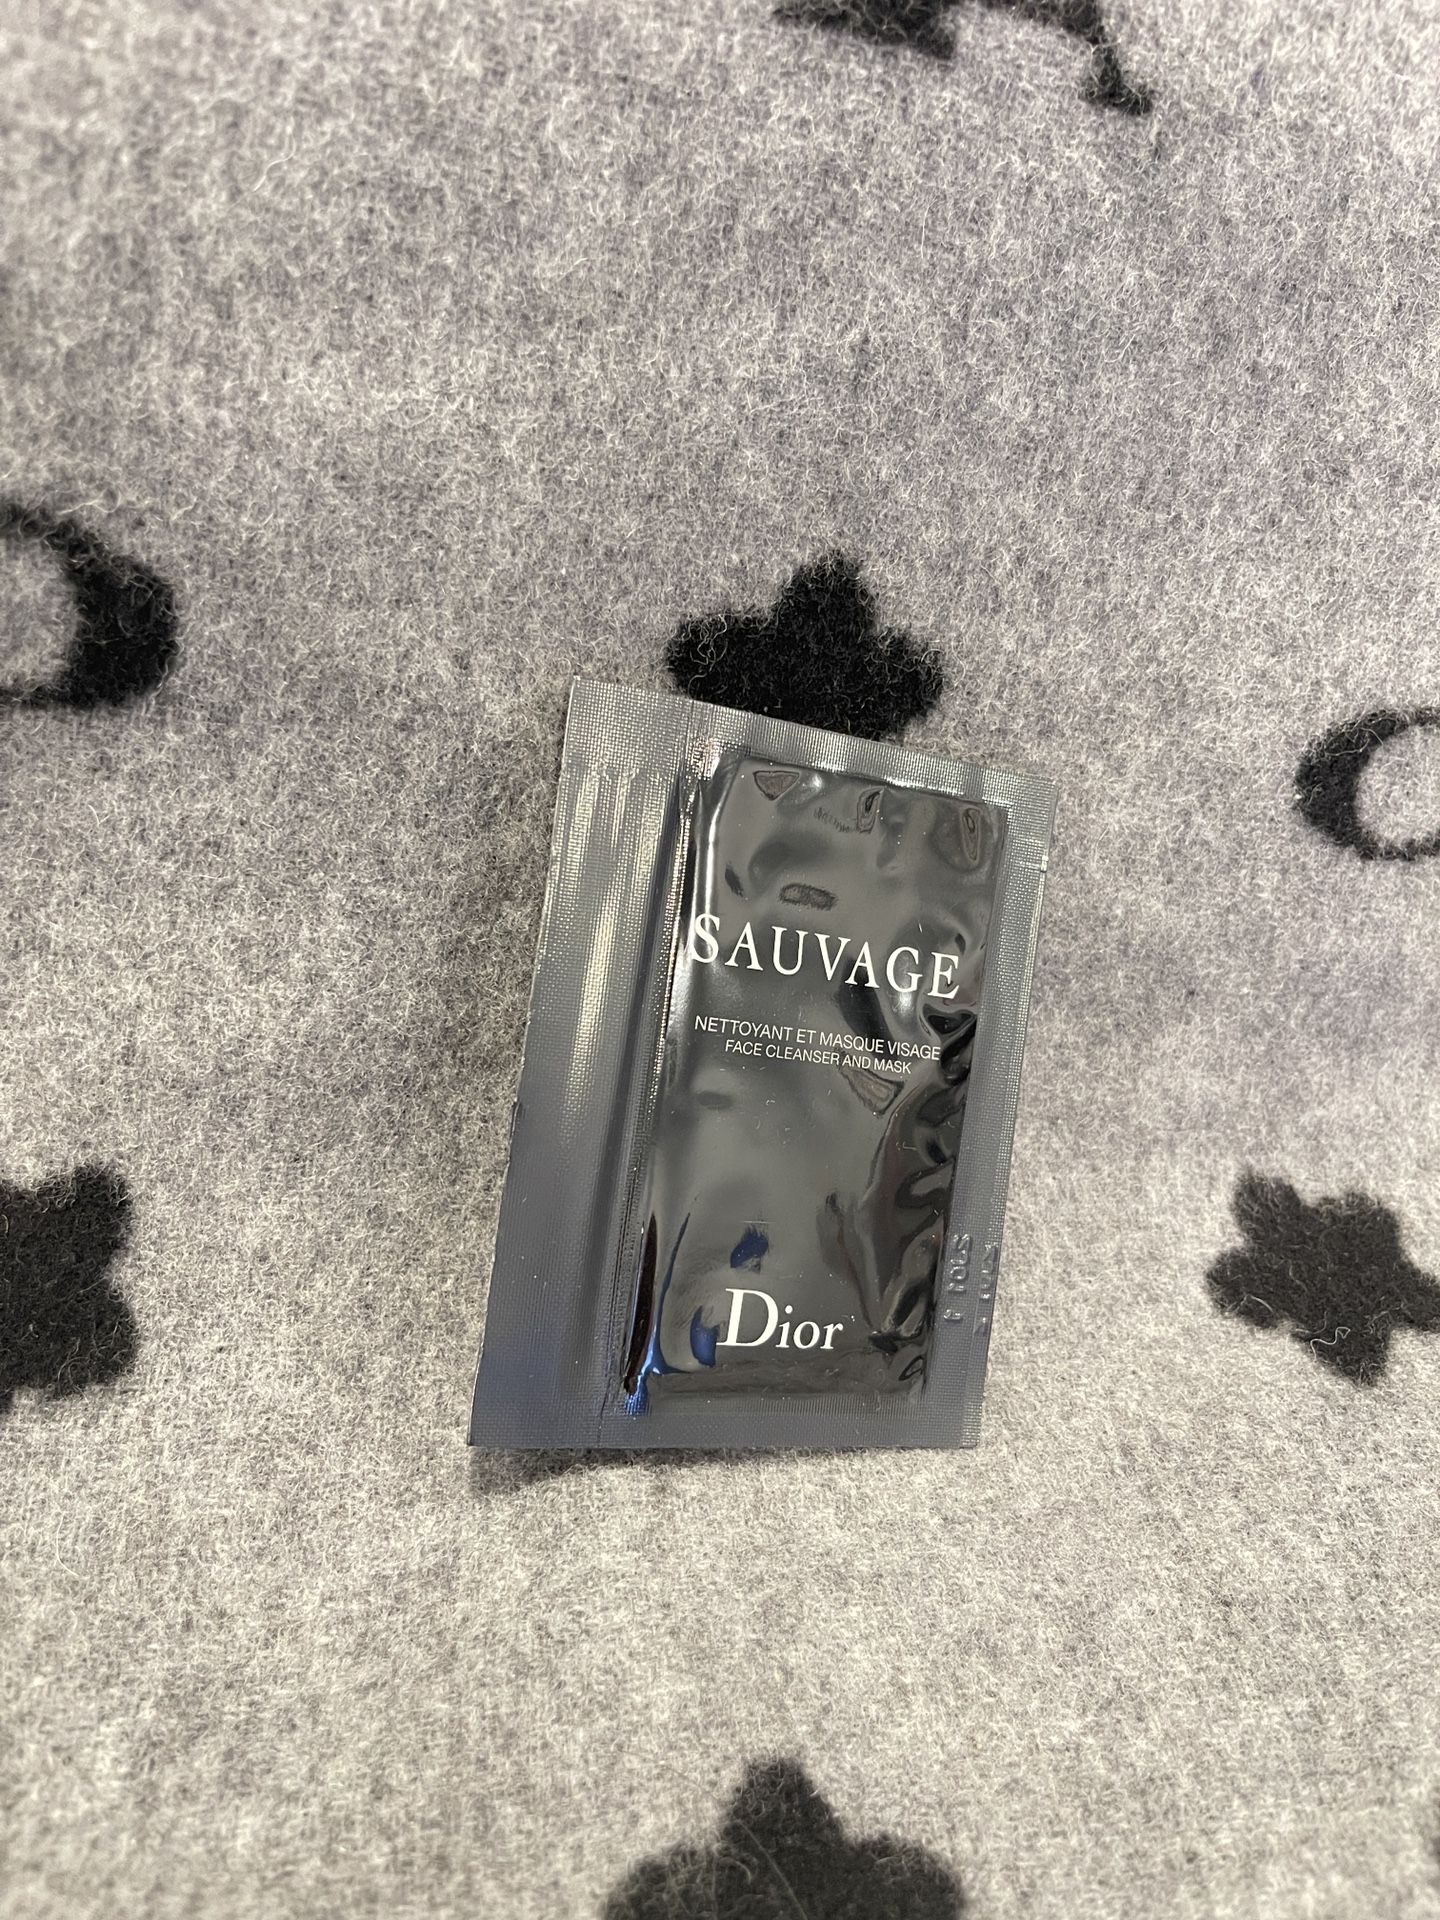 Dior sauvage sample card